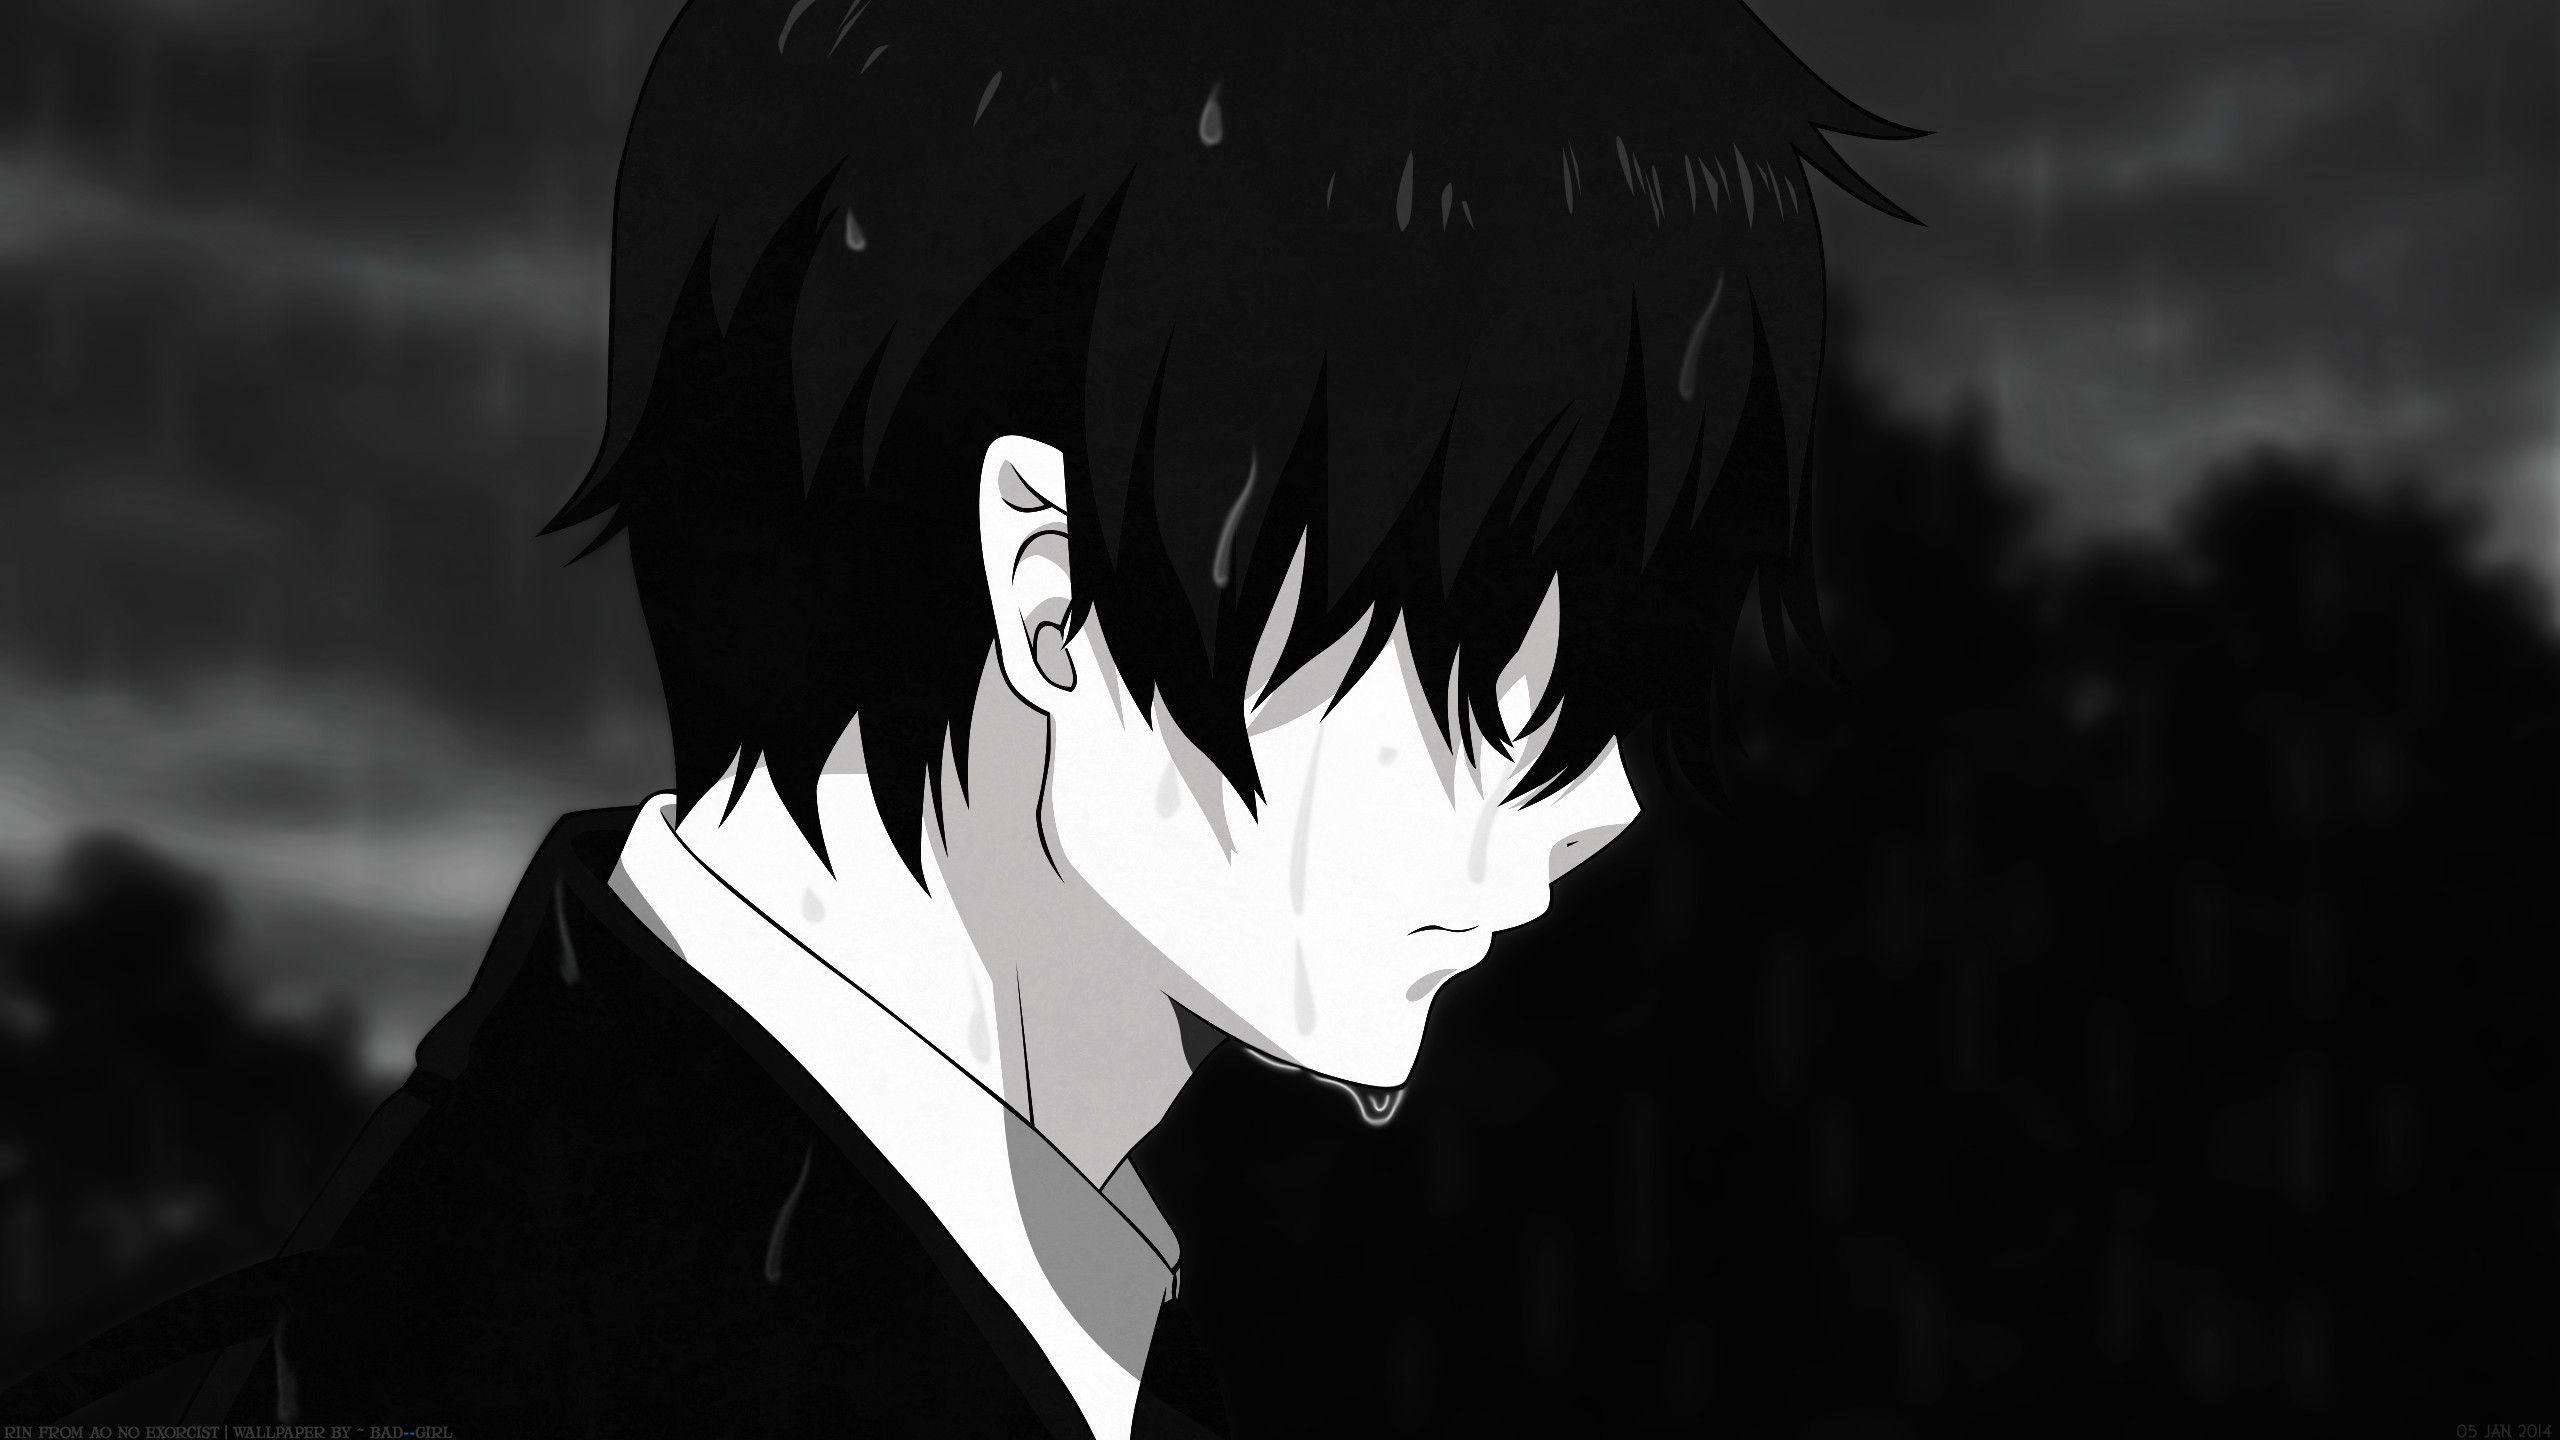 Sad Boy Anime Wallpapers Top Free Sad Boy Anime Backgrounds